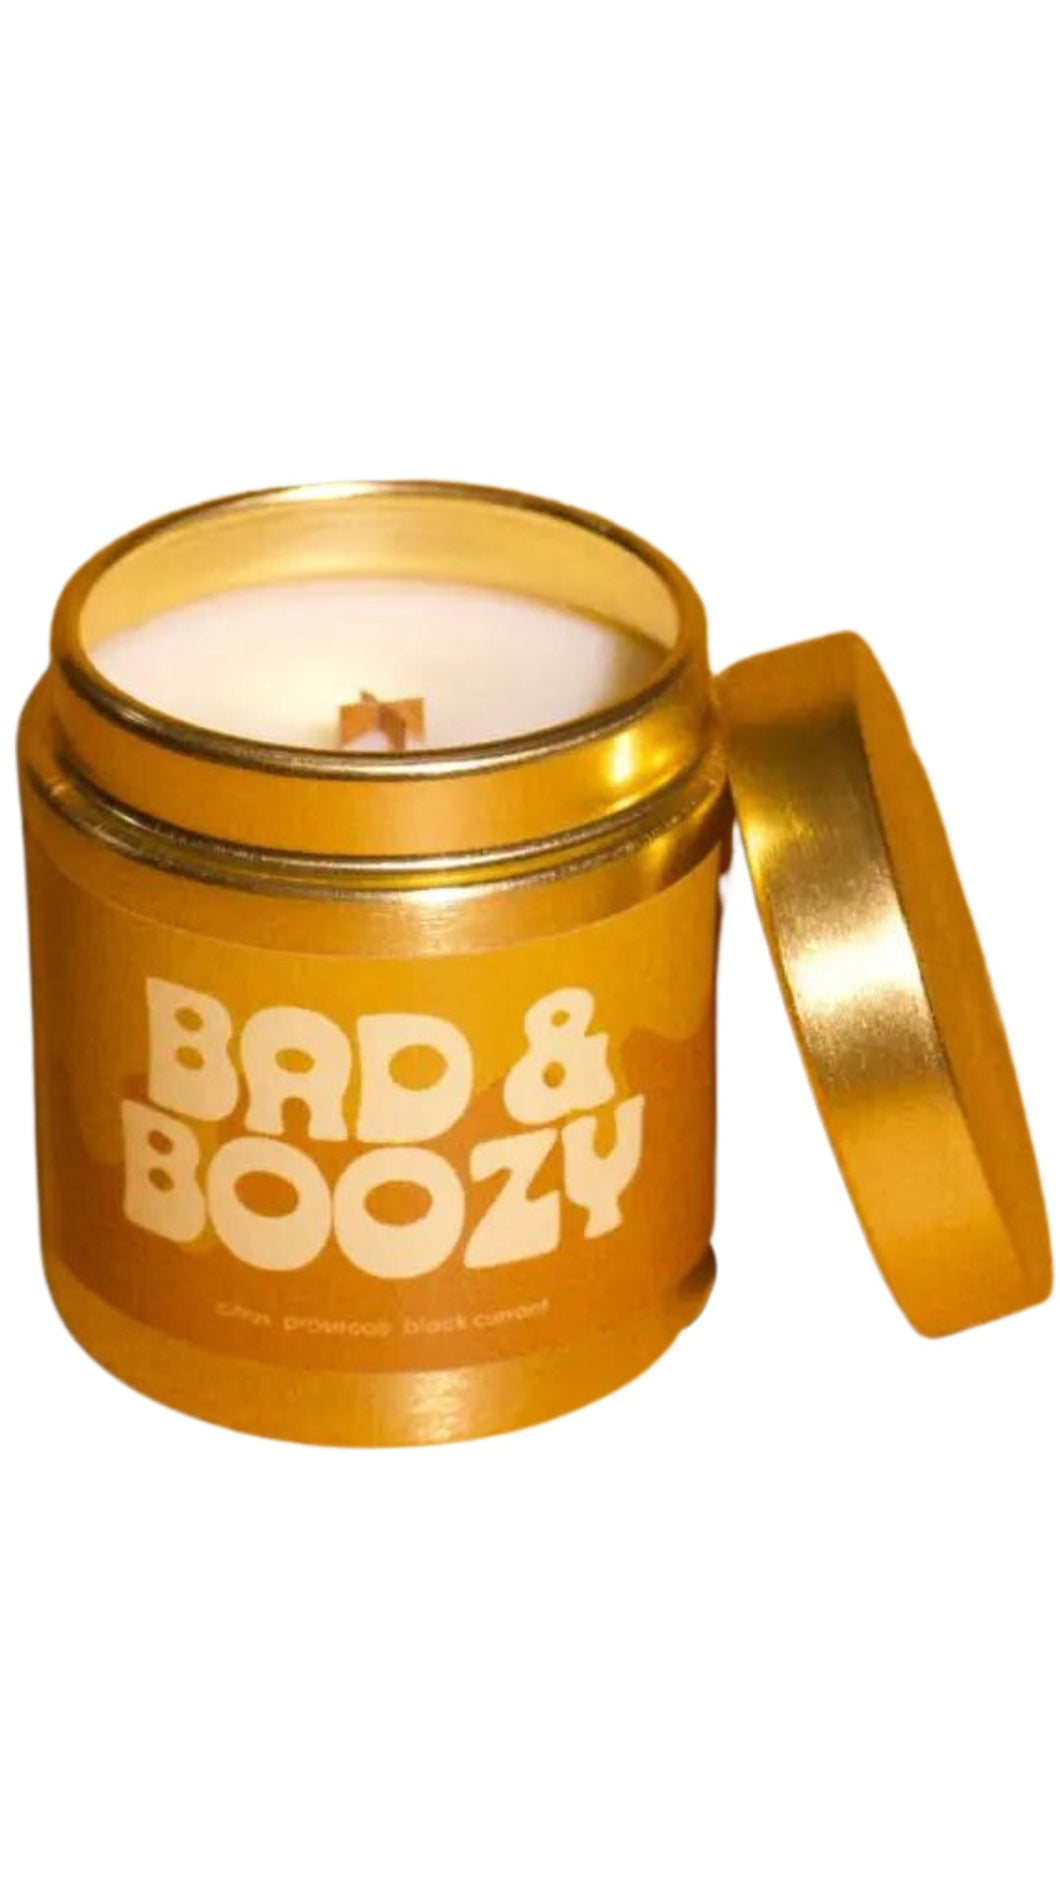 Bad & Boozy Candle